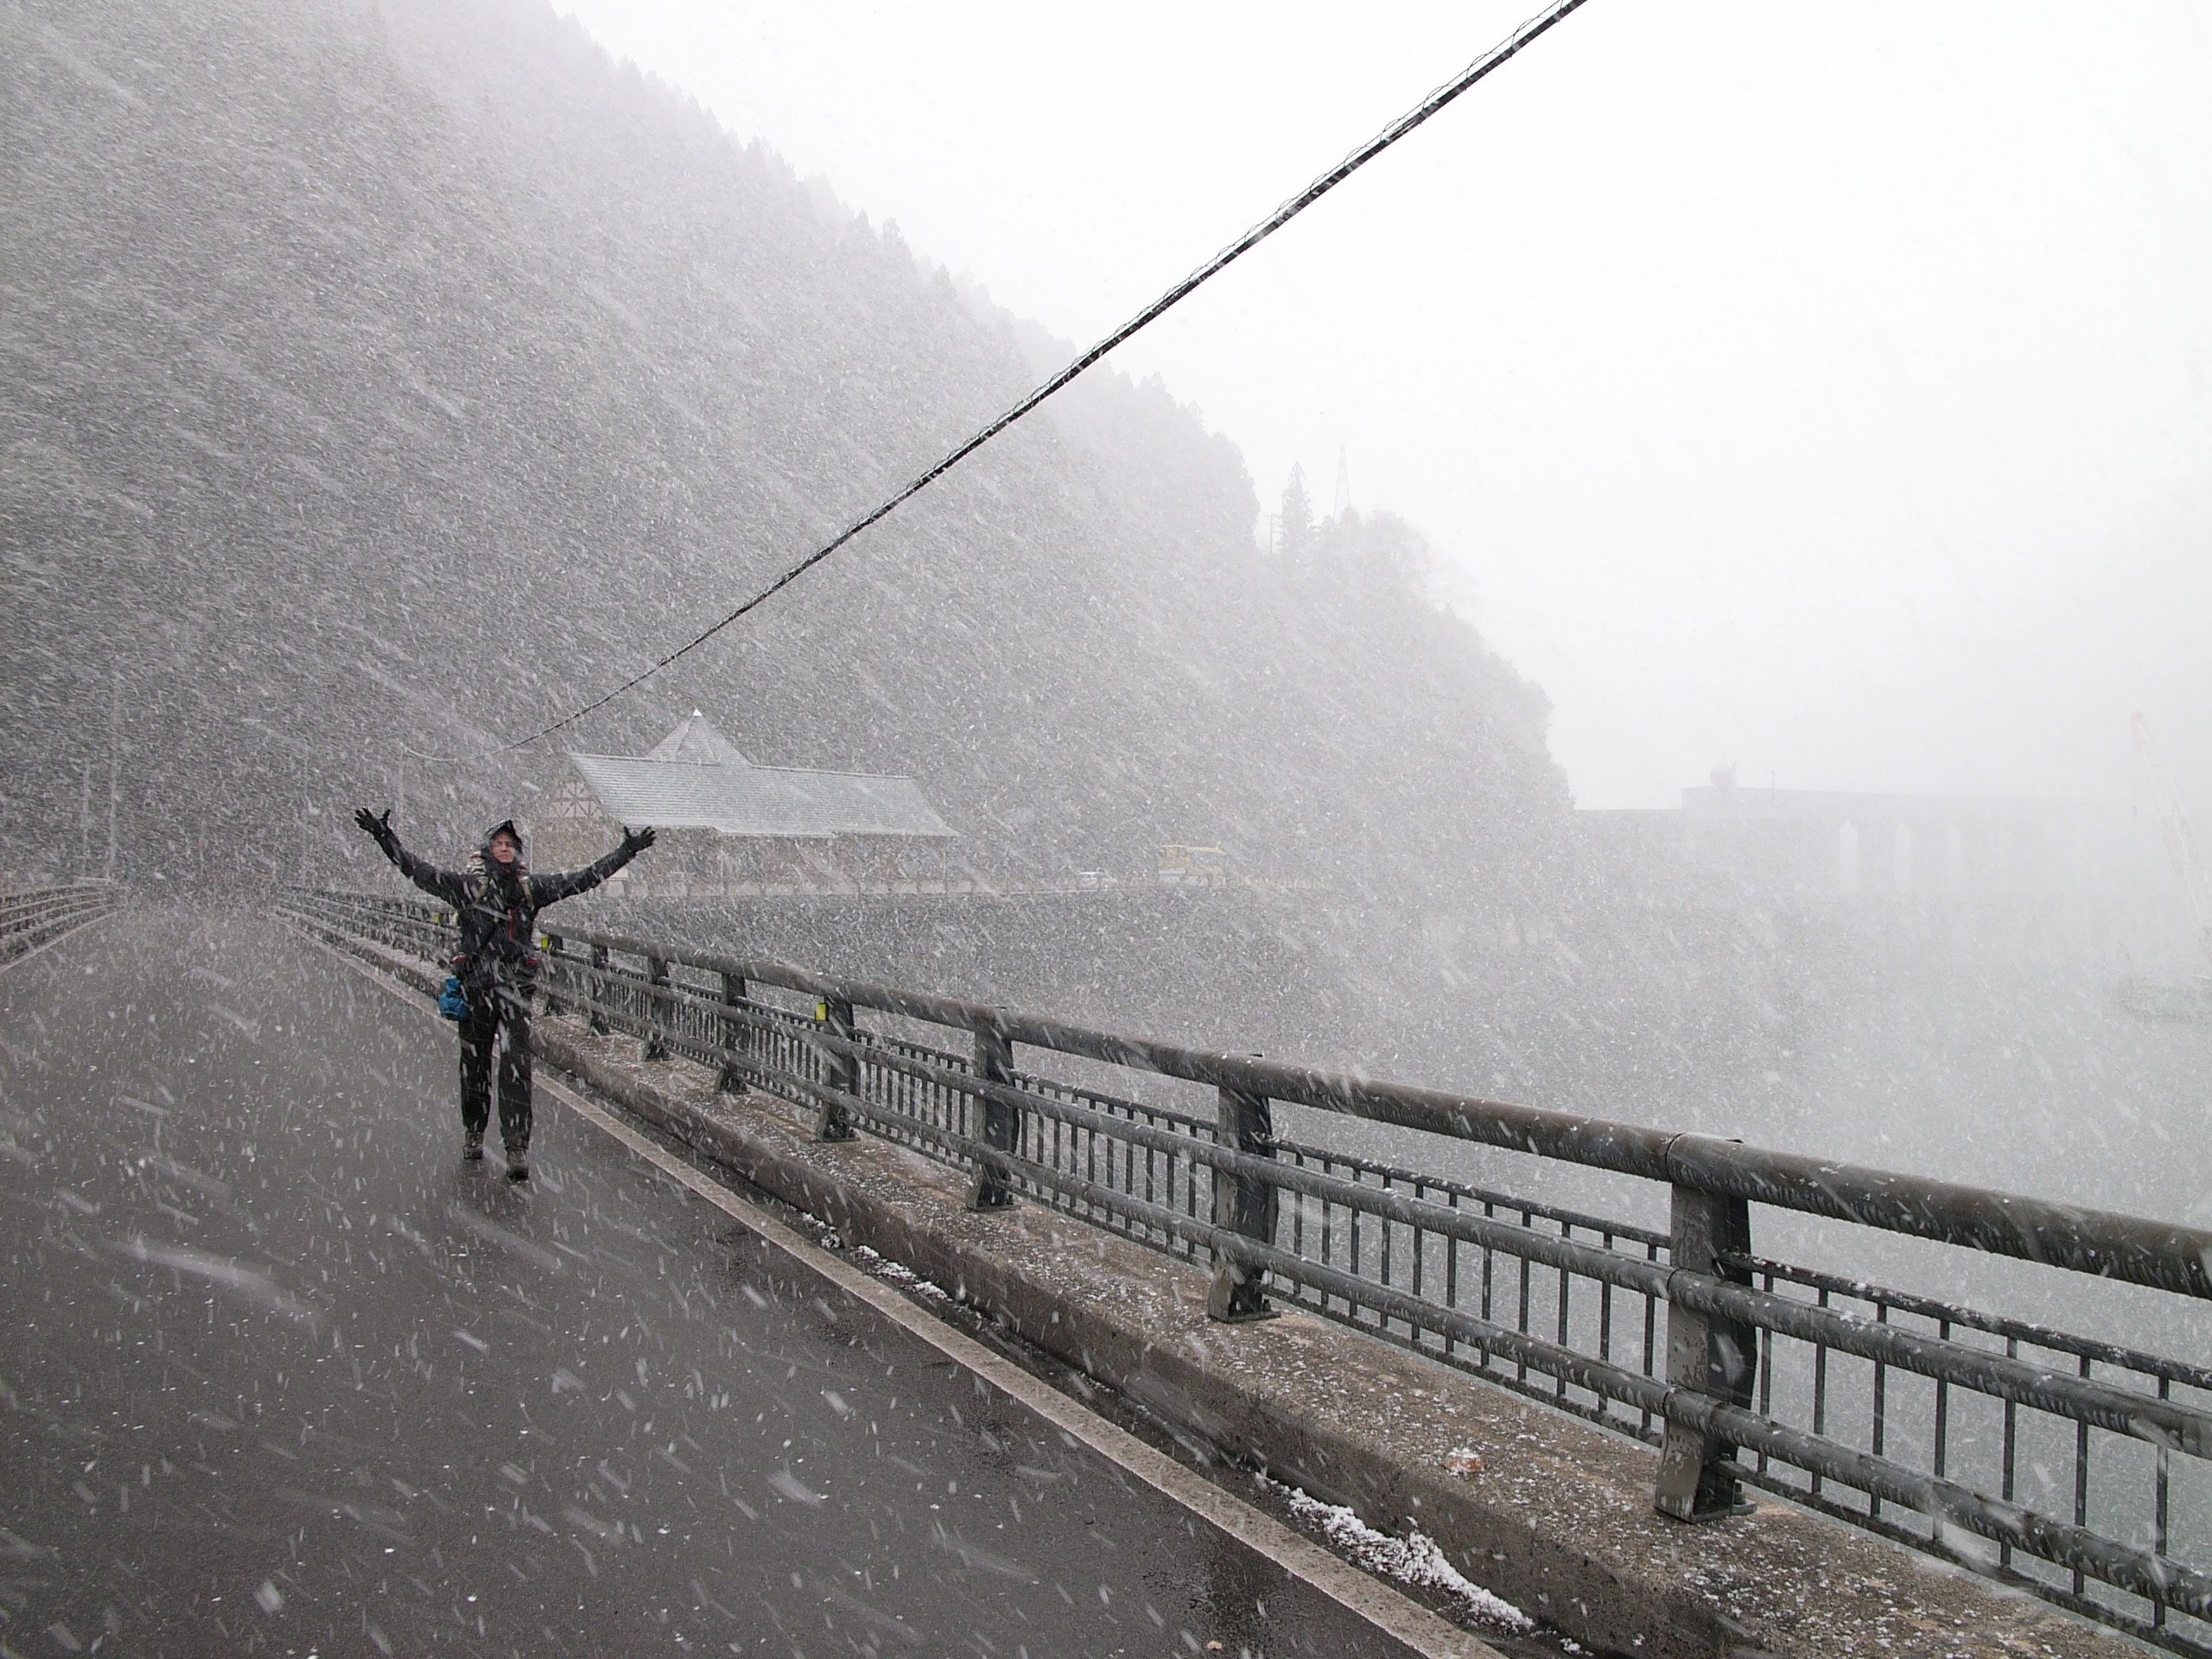 Another man, Gyula Simonyi, walks across a bridge in heavy snowfall, holding his arms above his head.